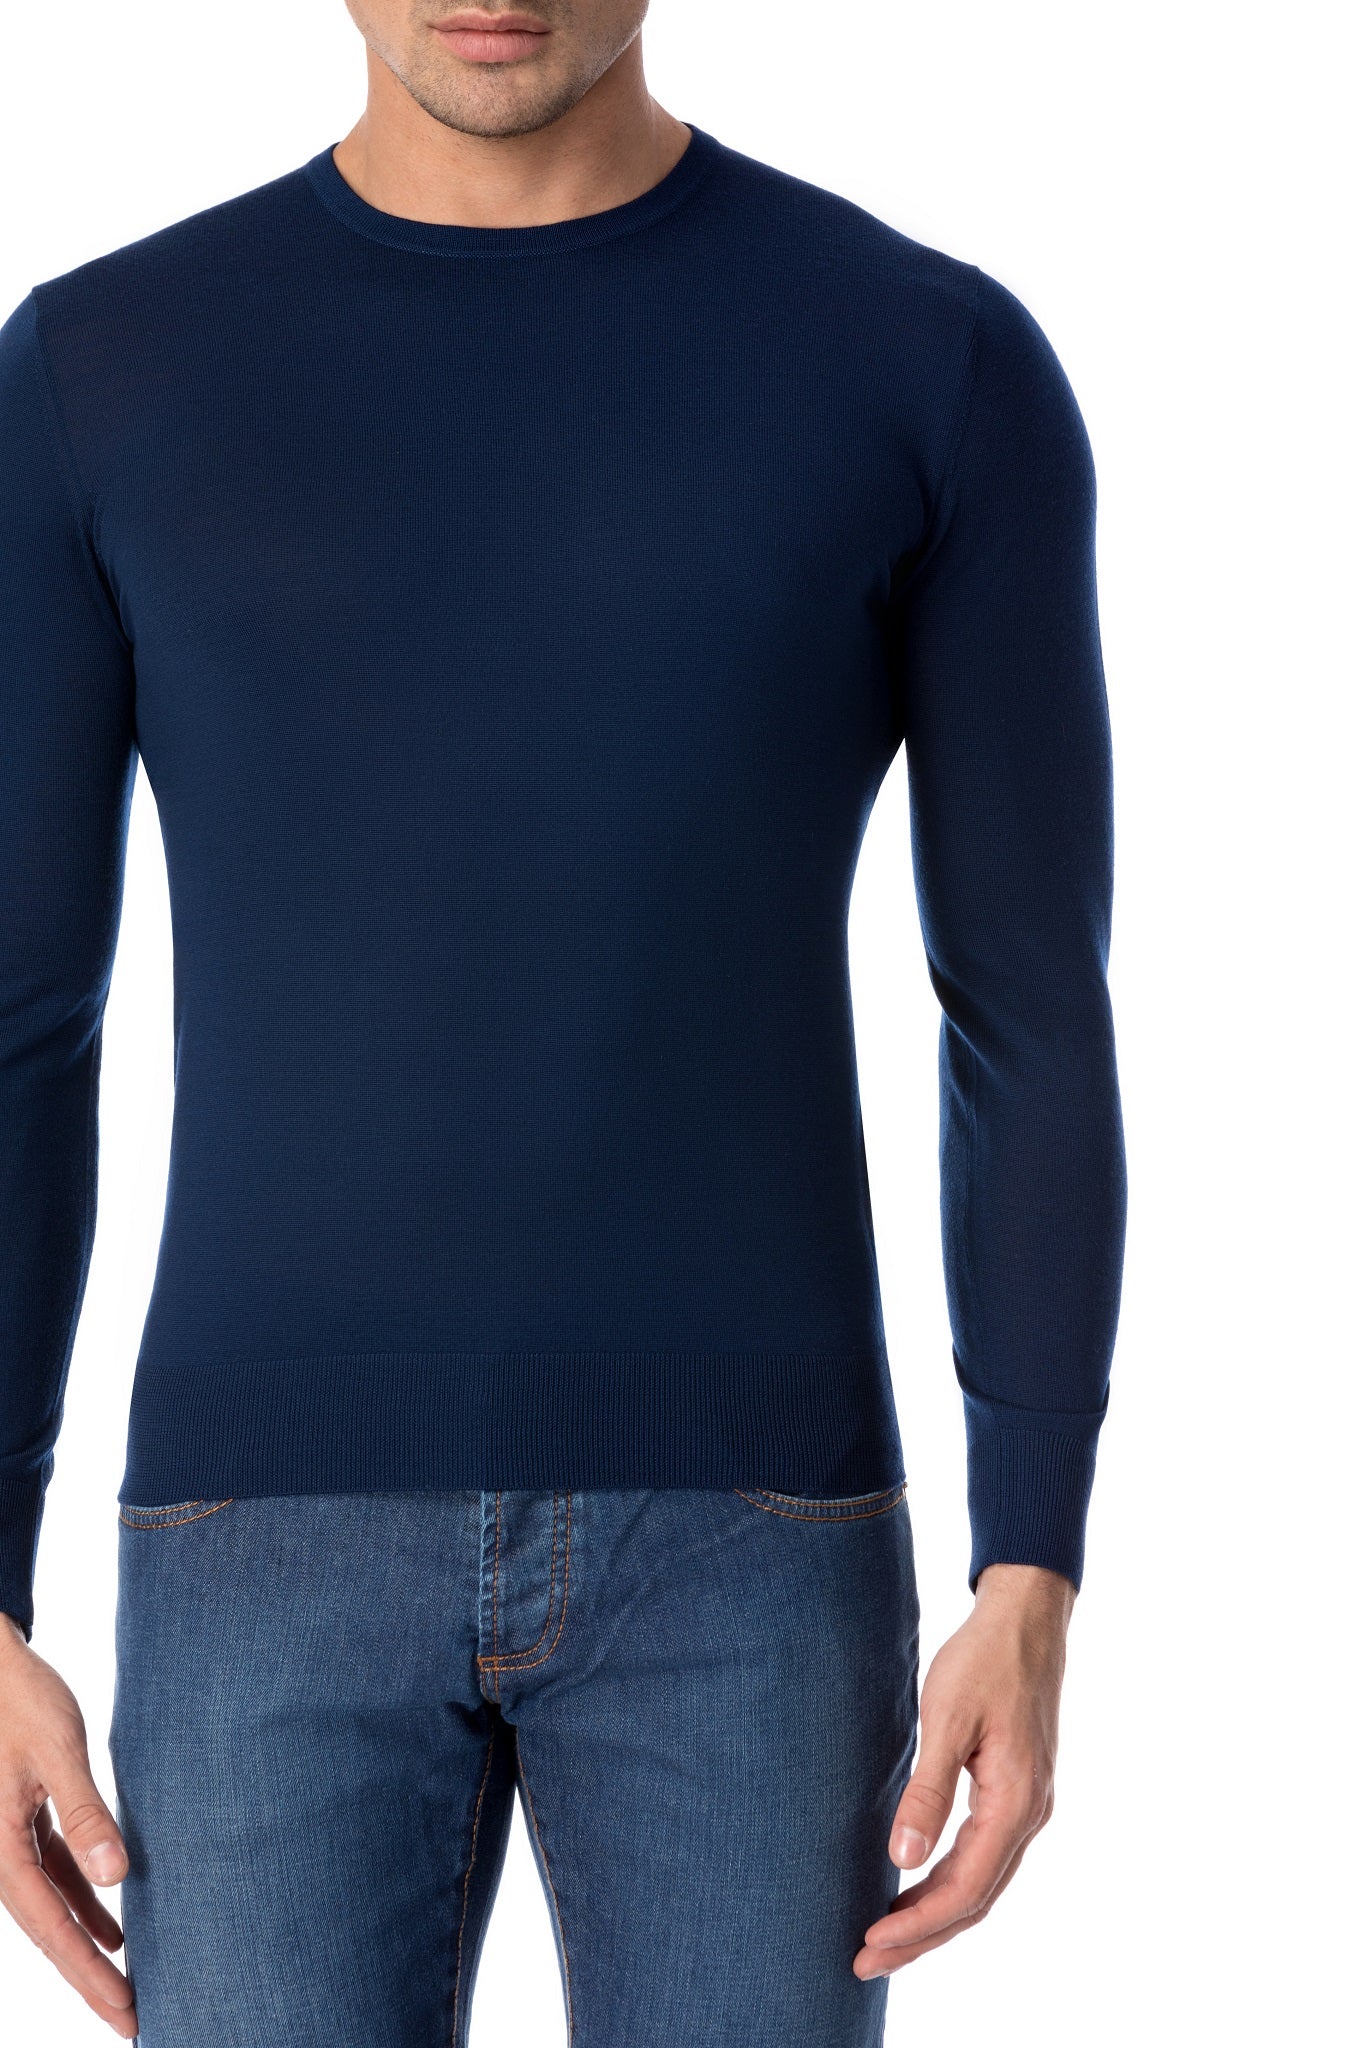 Fine navy blue merino wool sweater